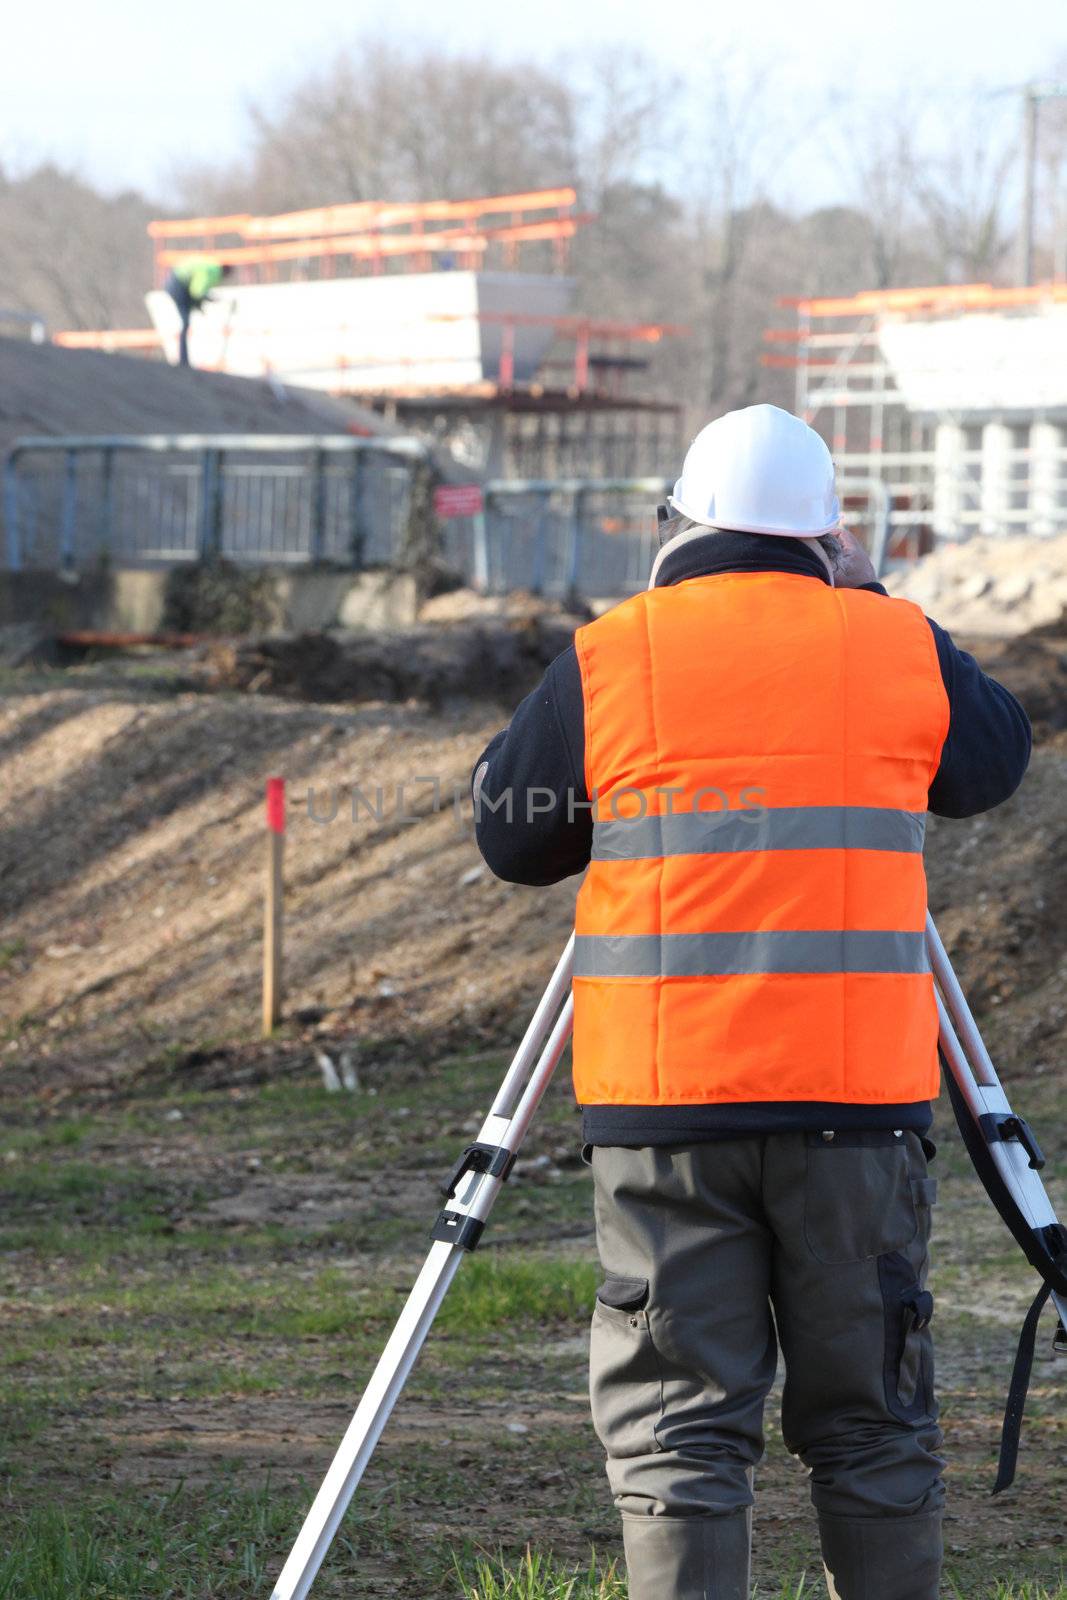 Surveyor on site